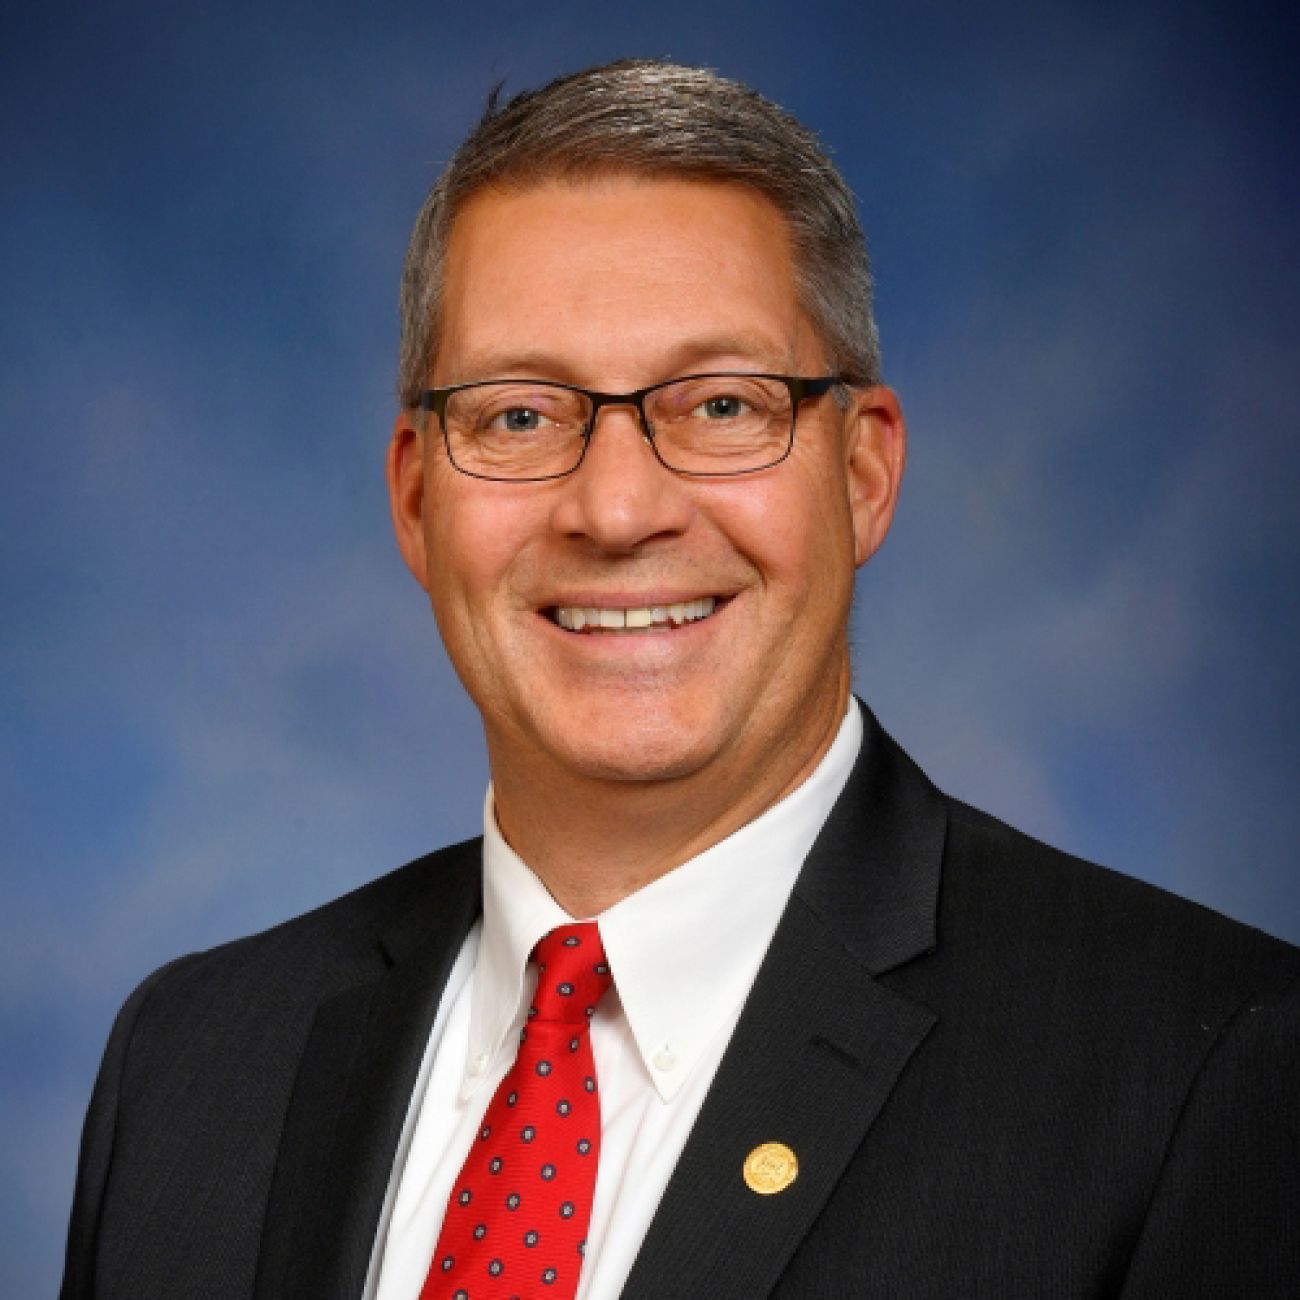 Michigan Rep. Thomas Kunse headshot